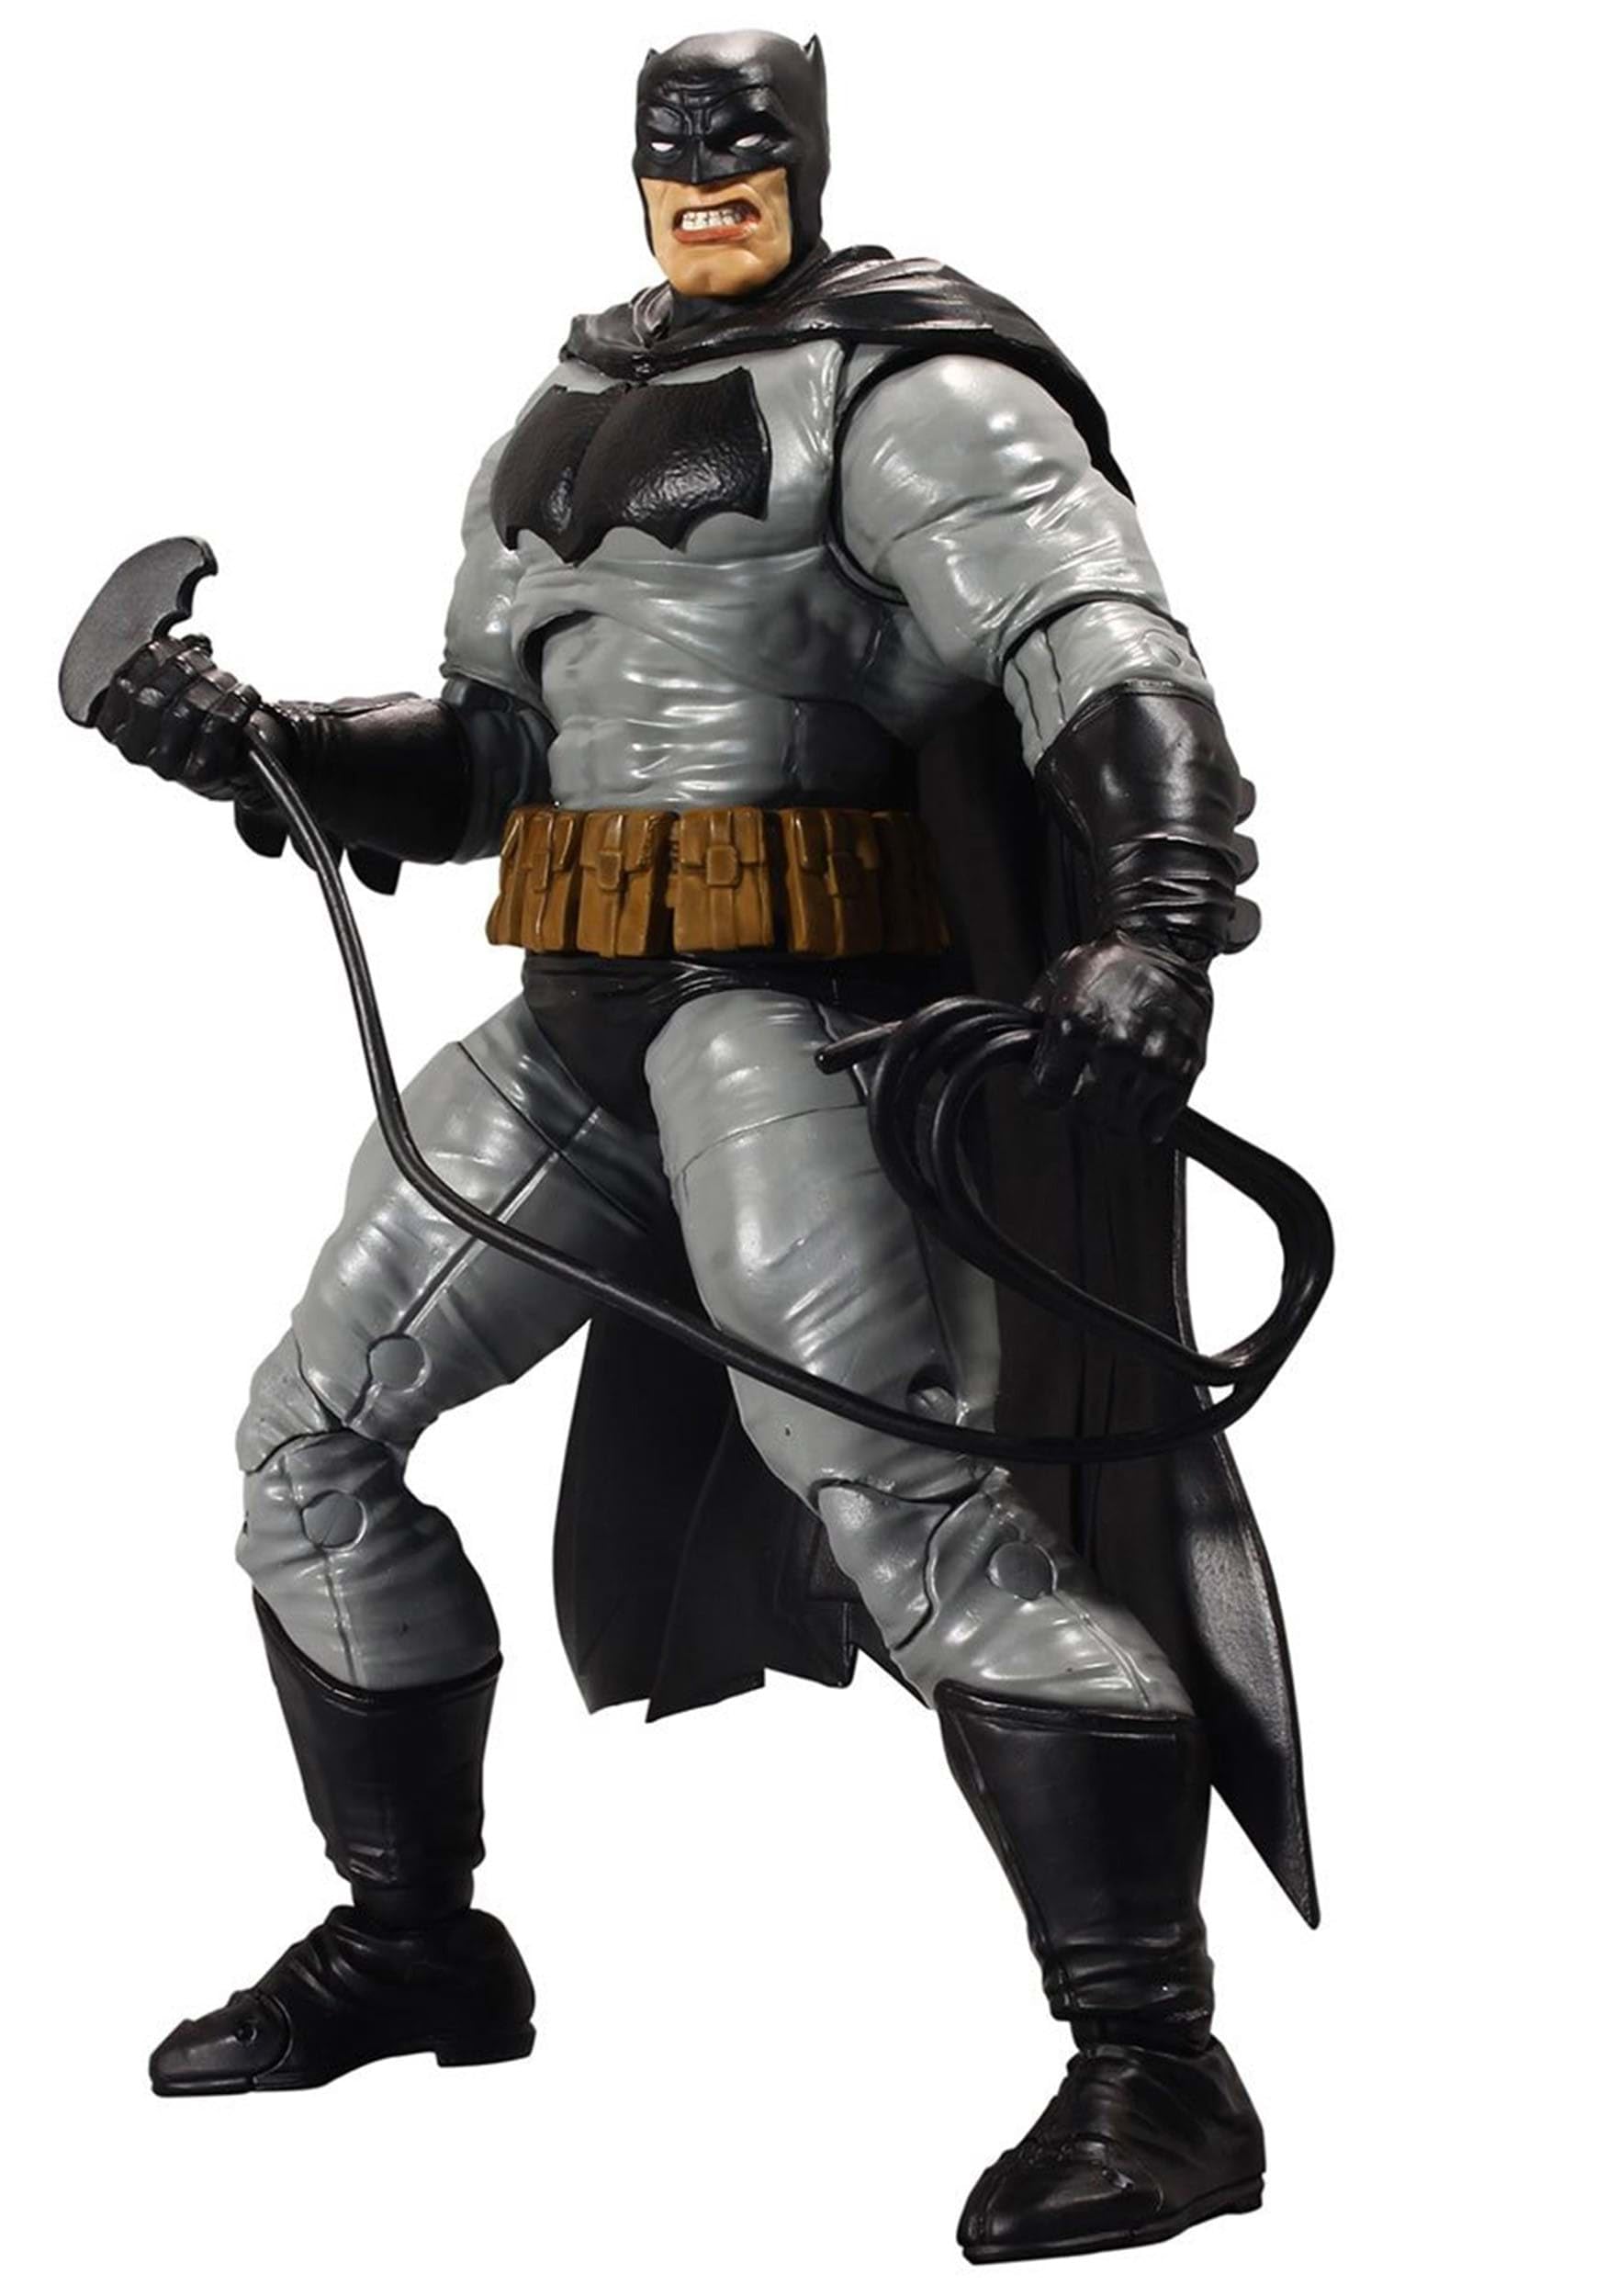 McFarlane Toys DC Multiverse The Dark Knight Returns Batman 7